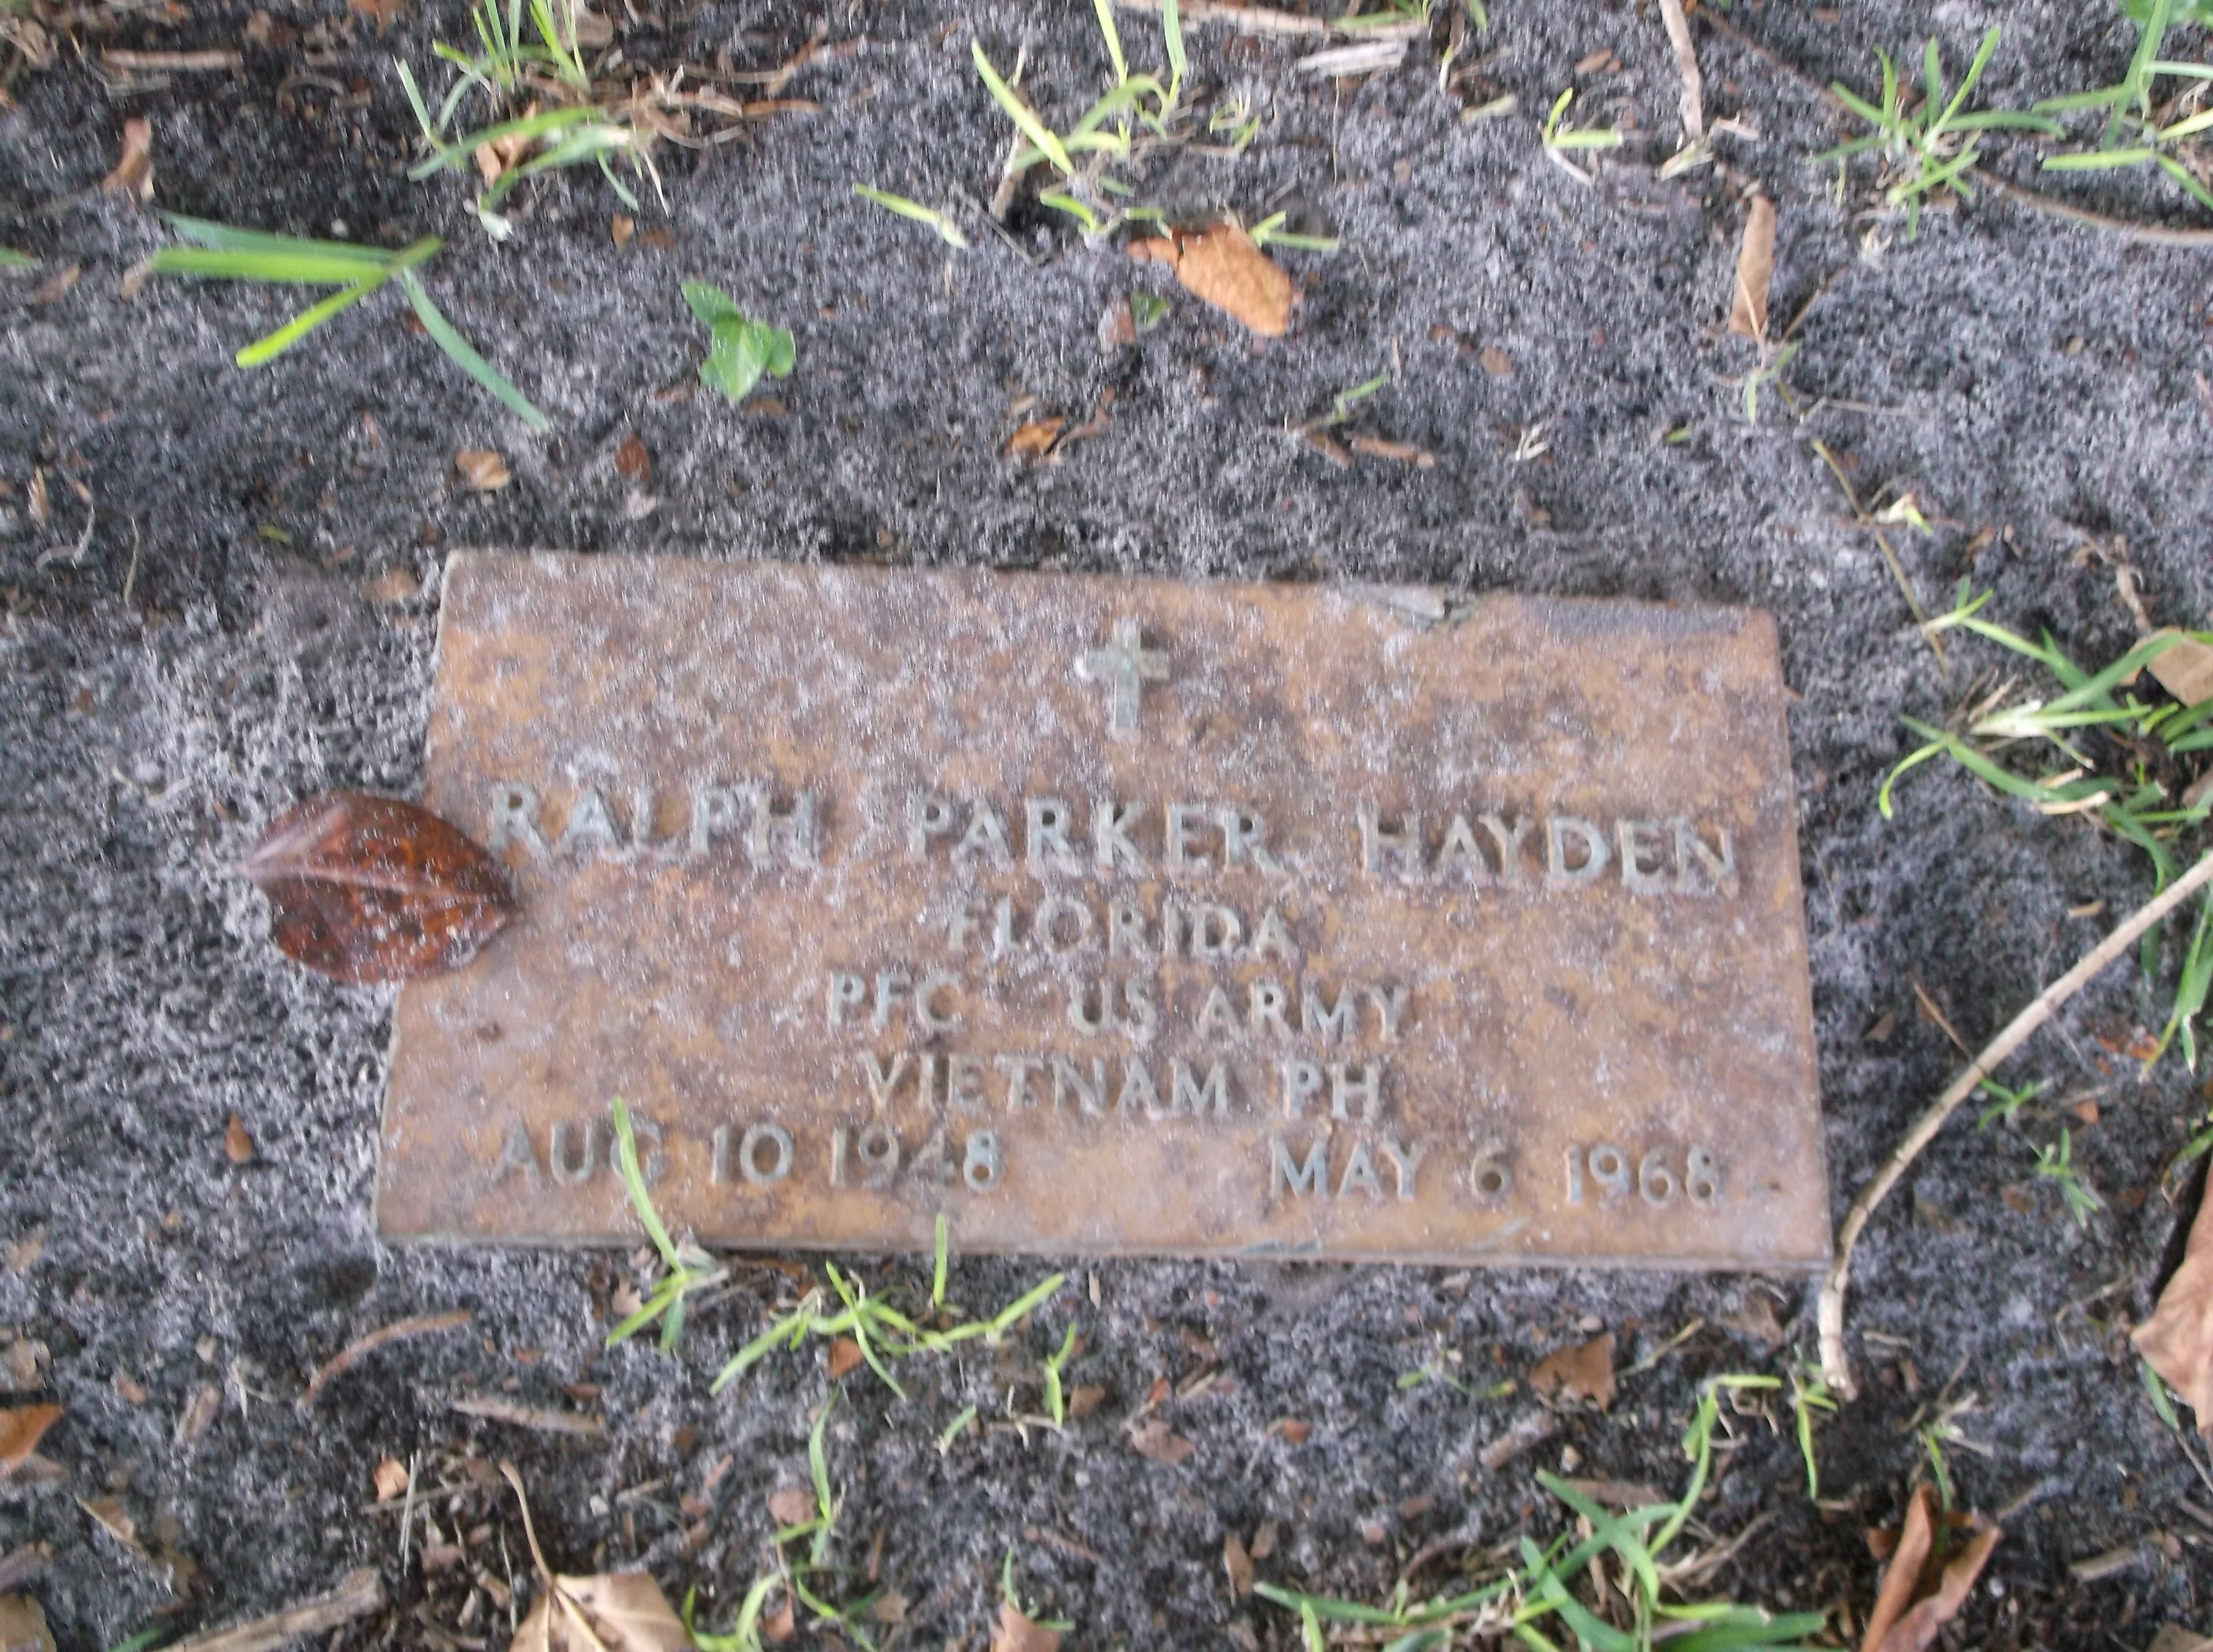 Ralph Parker Hayden